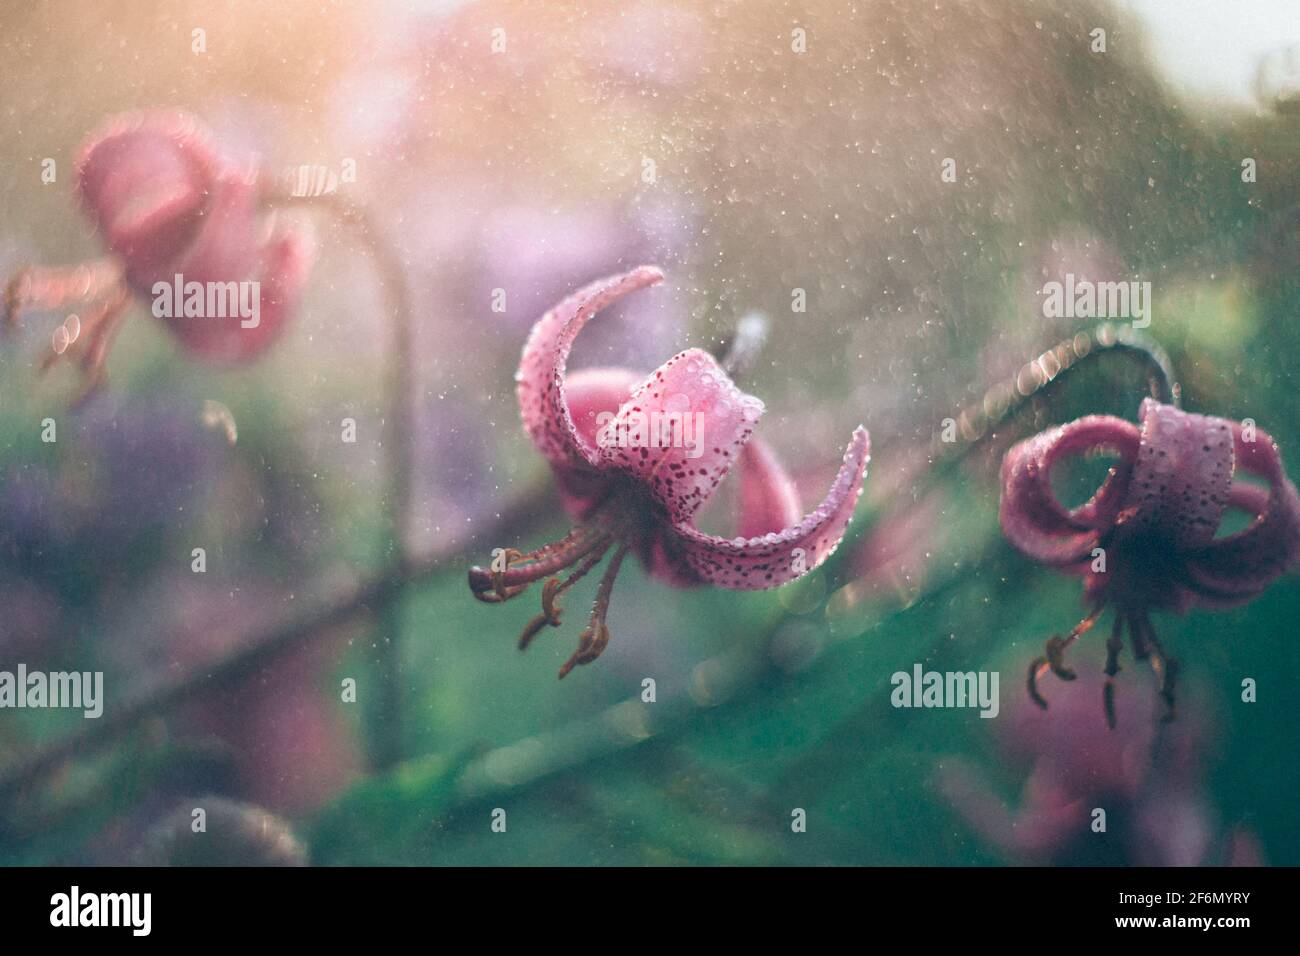 bosque lirio fotografiado en un lente vintage con hermoso bokeh. Flores con gotas sobre un fondo borroso. Foto de stock